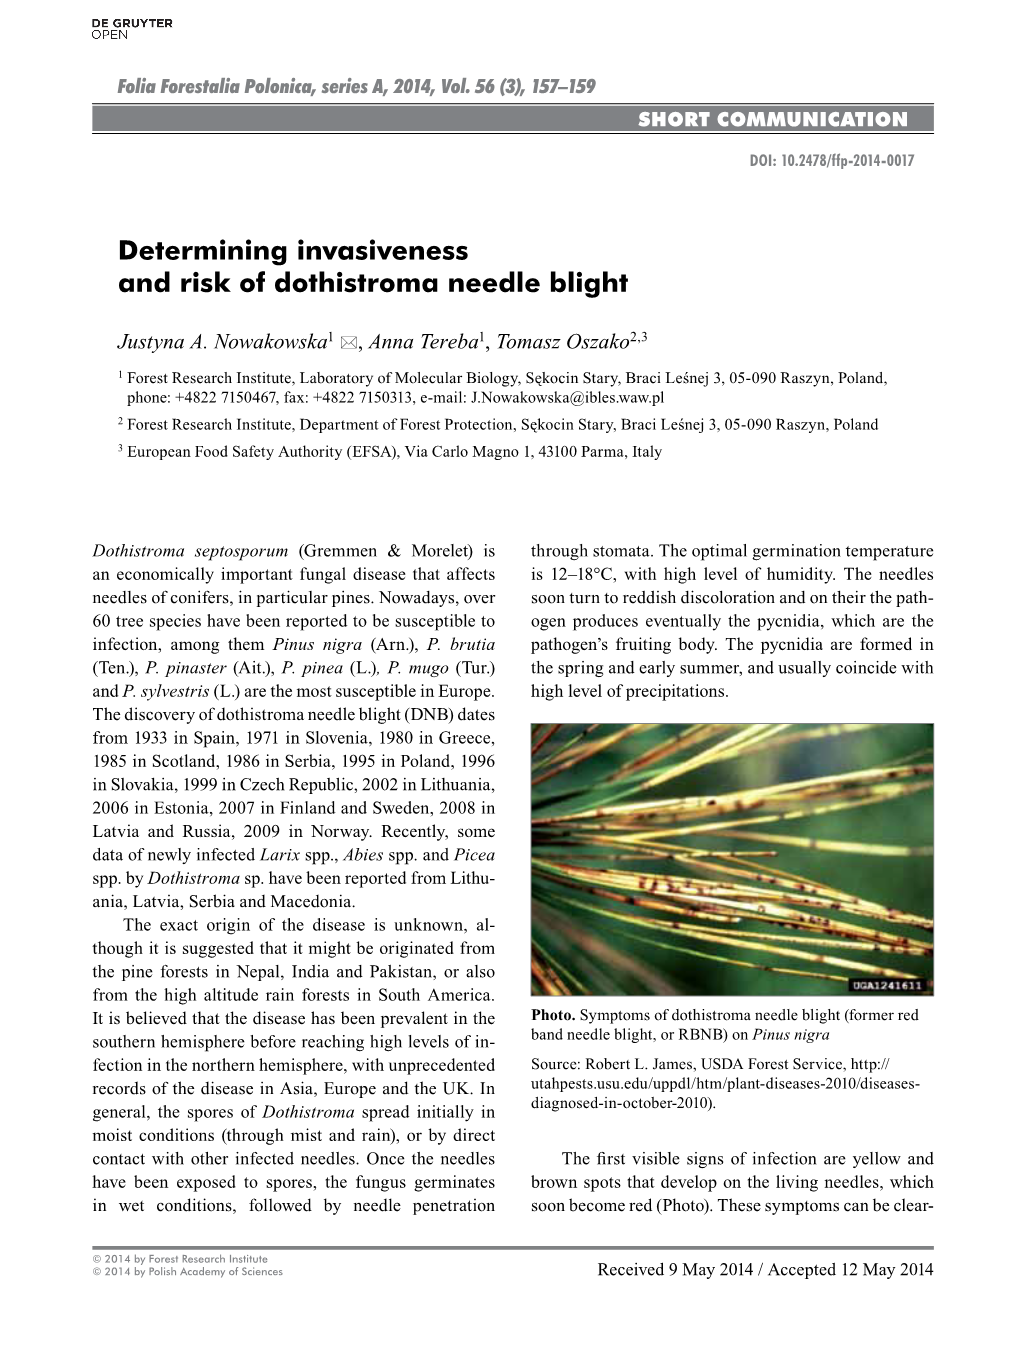 Determining Invasiveness and Risk of Dothistroma Needle Blight